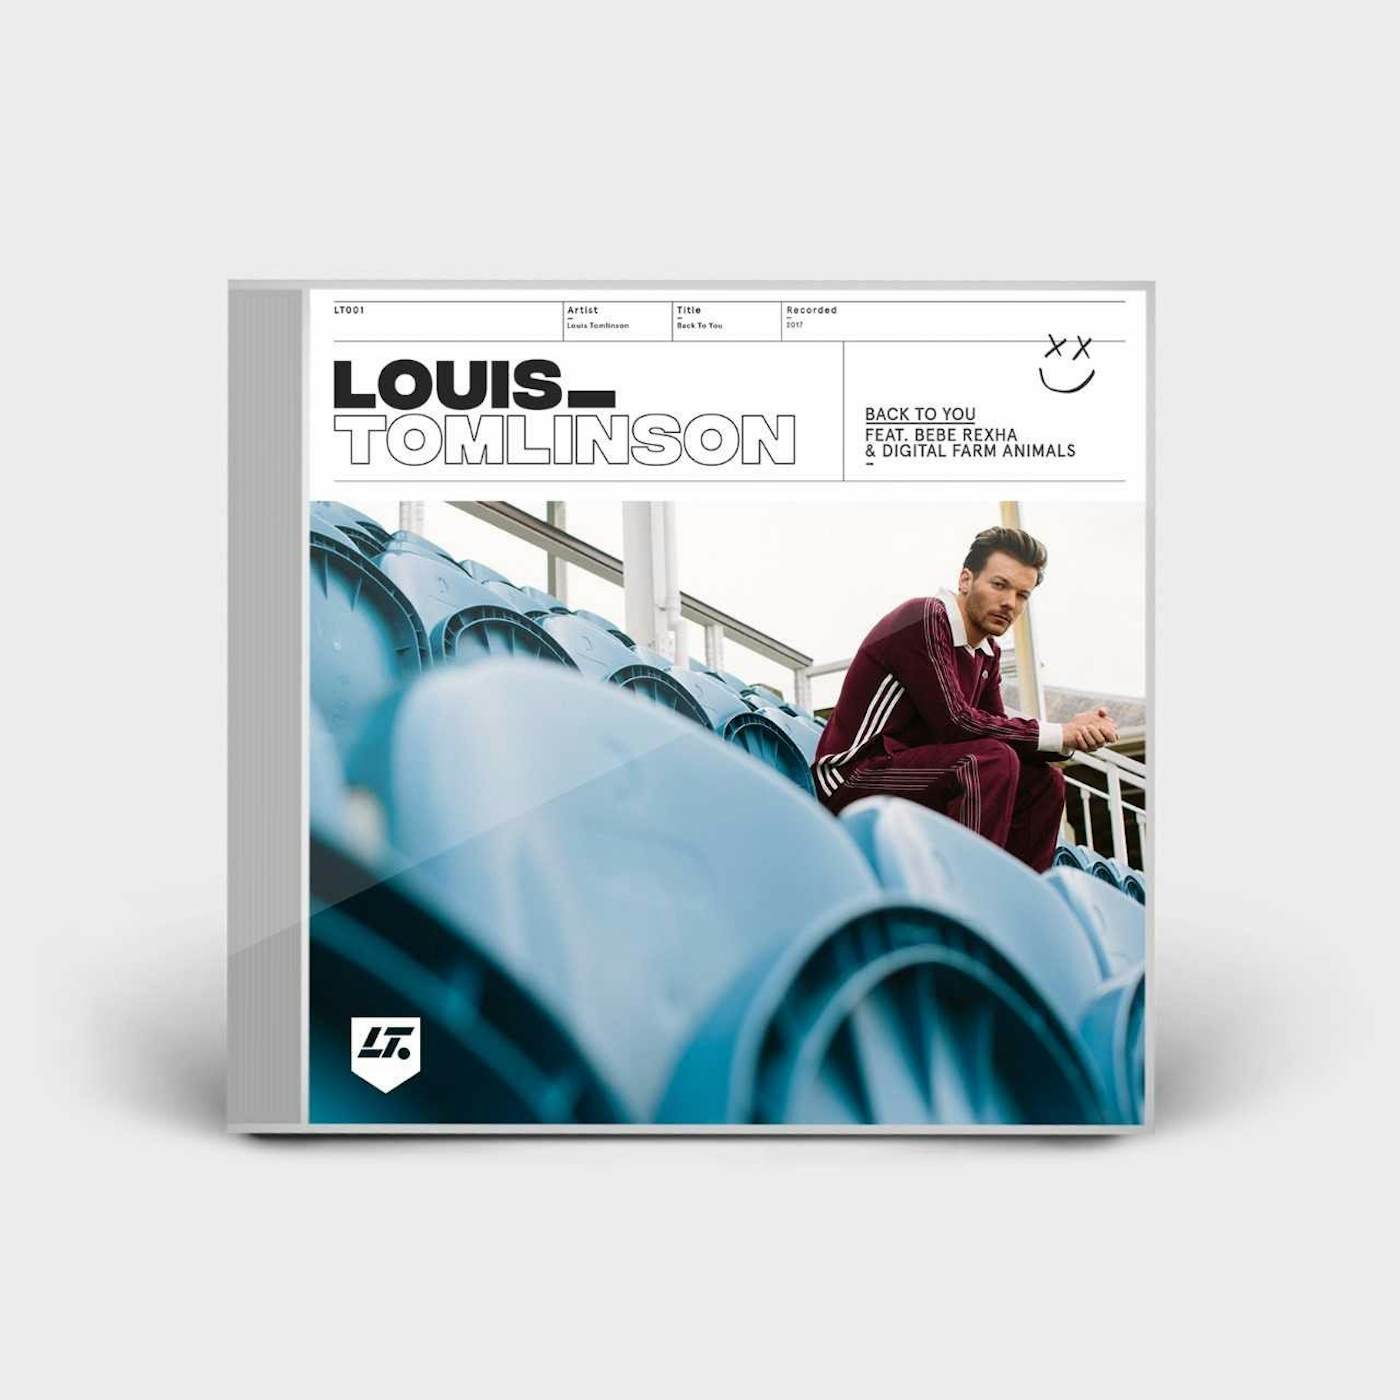 Louis Tomlinson Debut Album 'Walls:' Track List, Artwork, More